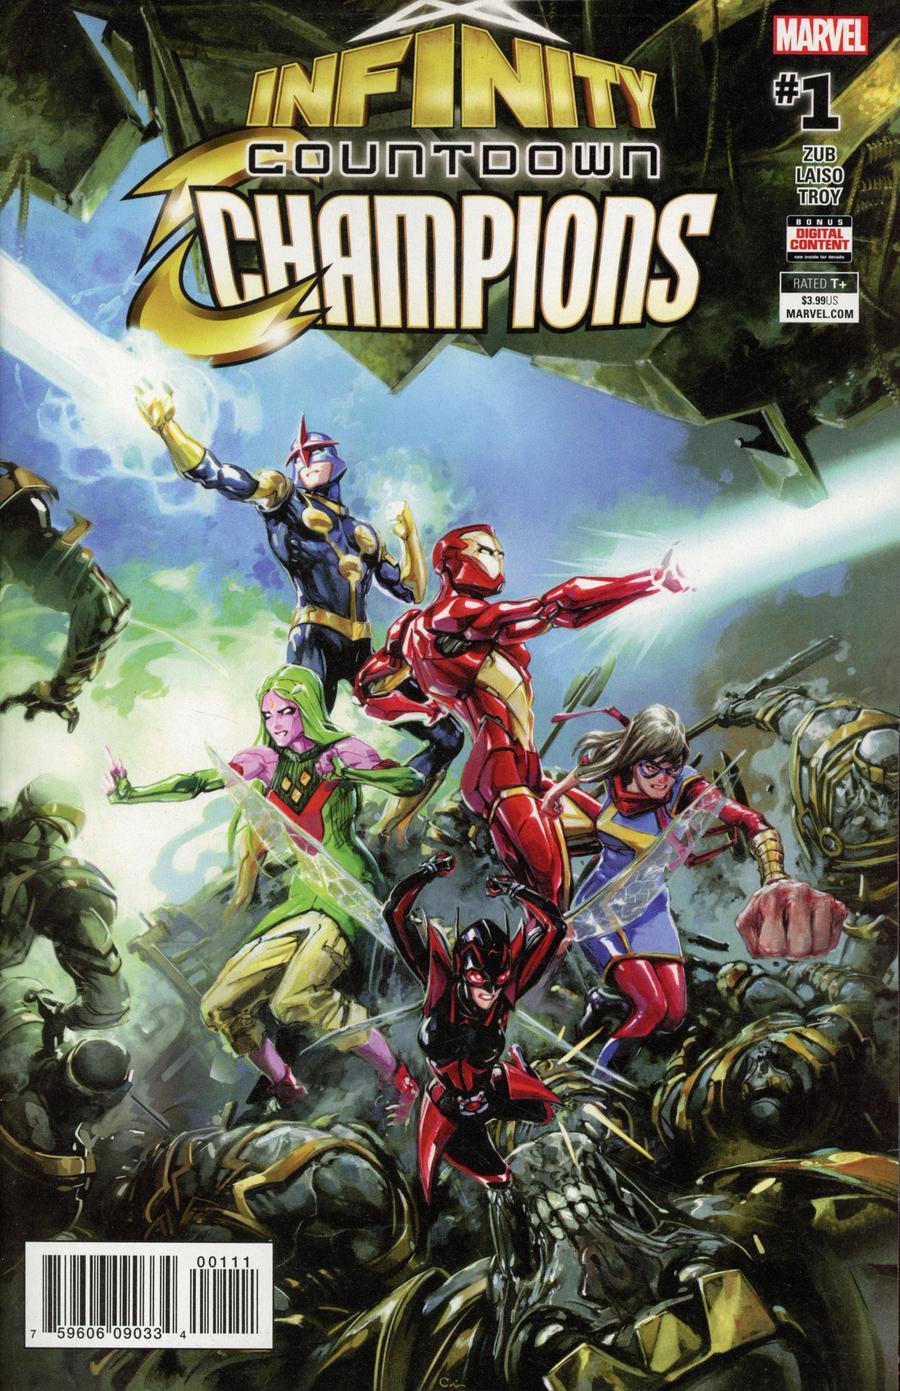 Infinity Countdown Champions Vol. 1 #1